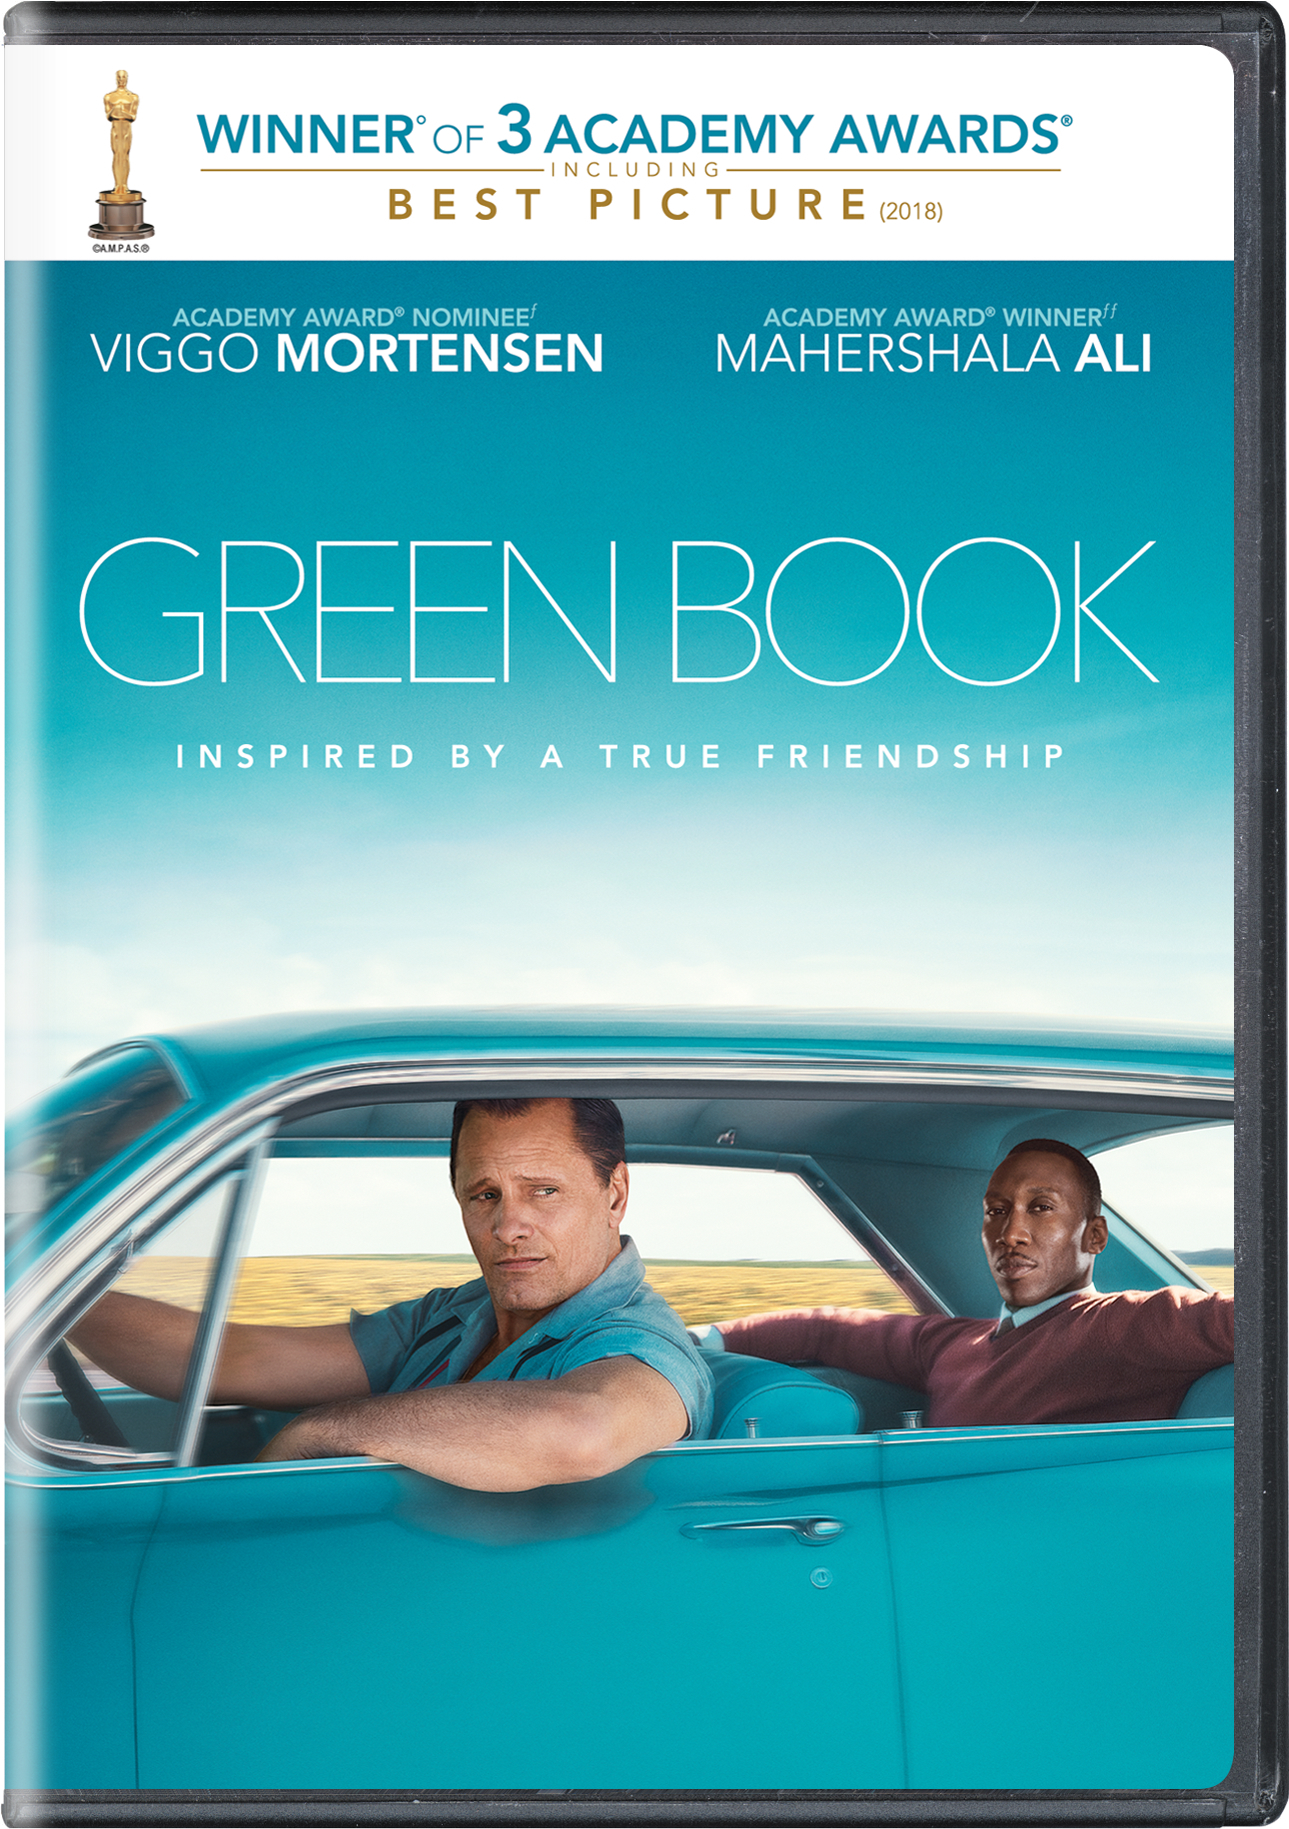 Green Book - DVD [ 2018 ]  - Drama Movies On DVD - Movies On GRUV